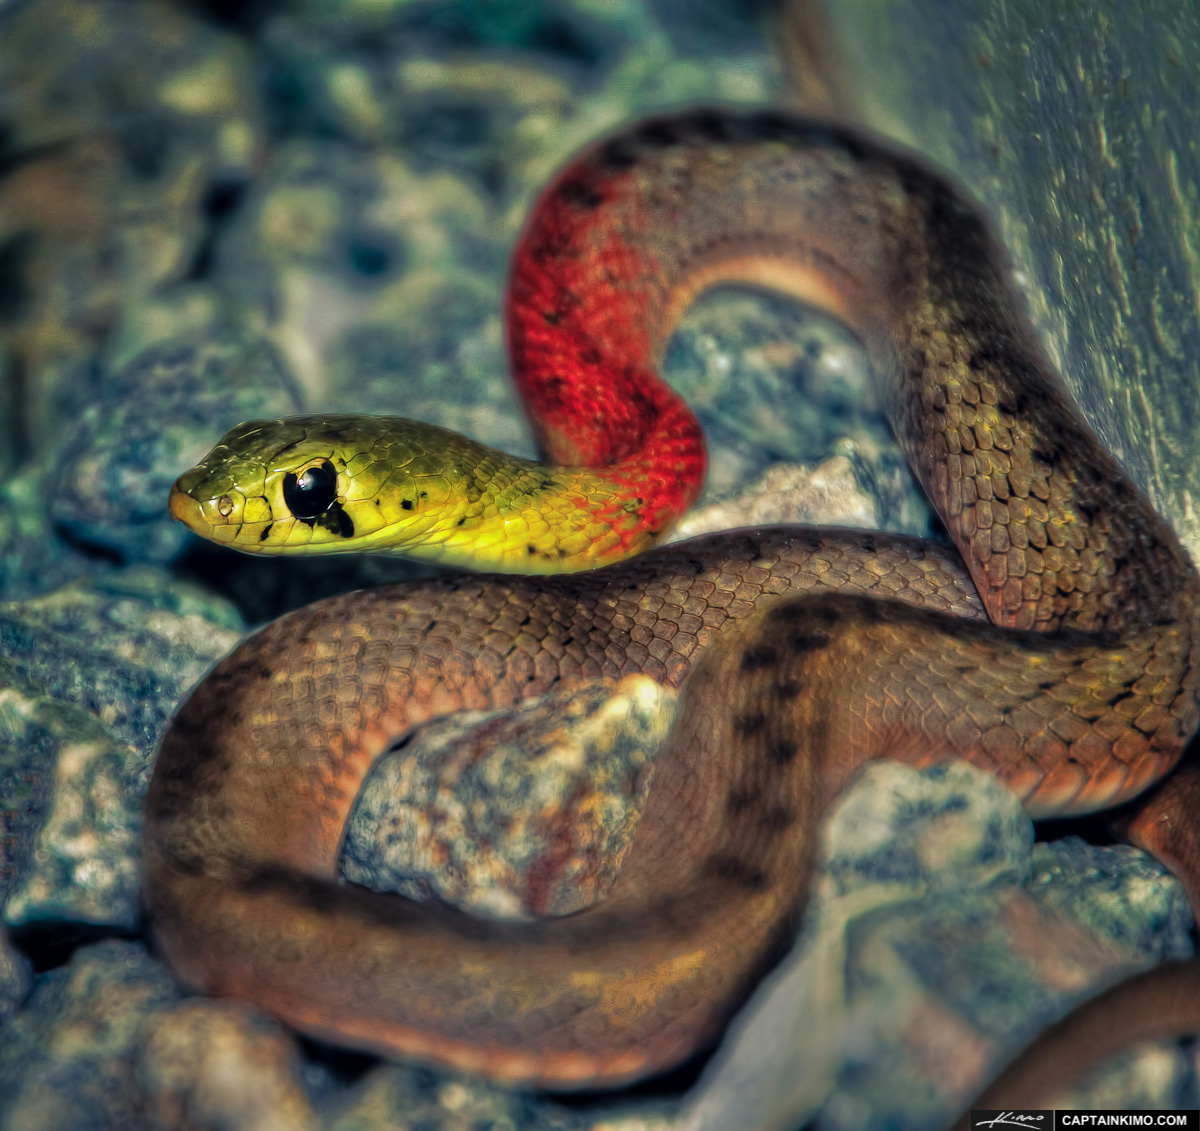 Poisonous Red-necked Keelback Snake from Phuket Thailand